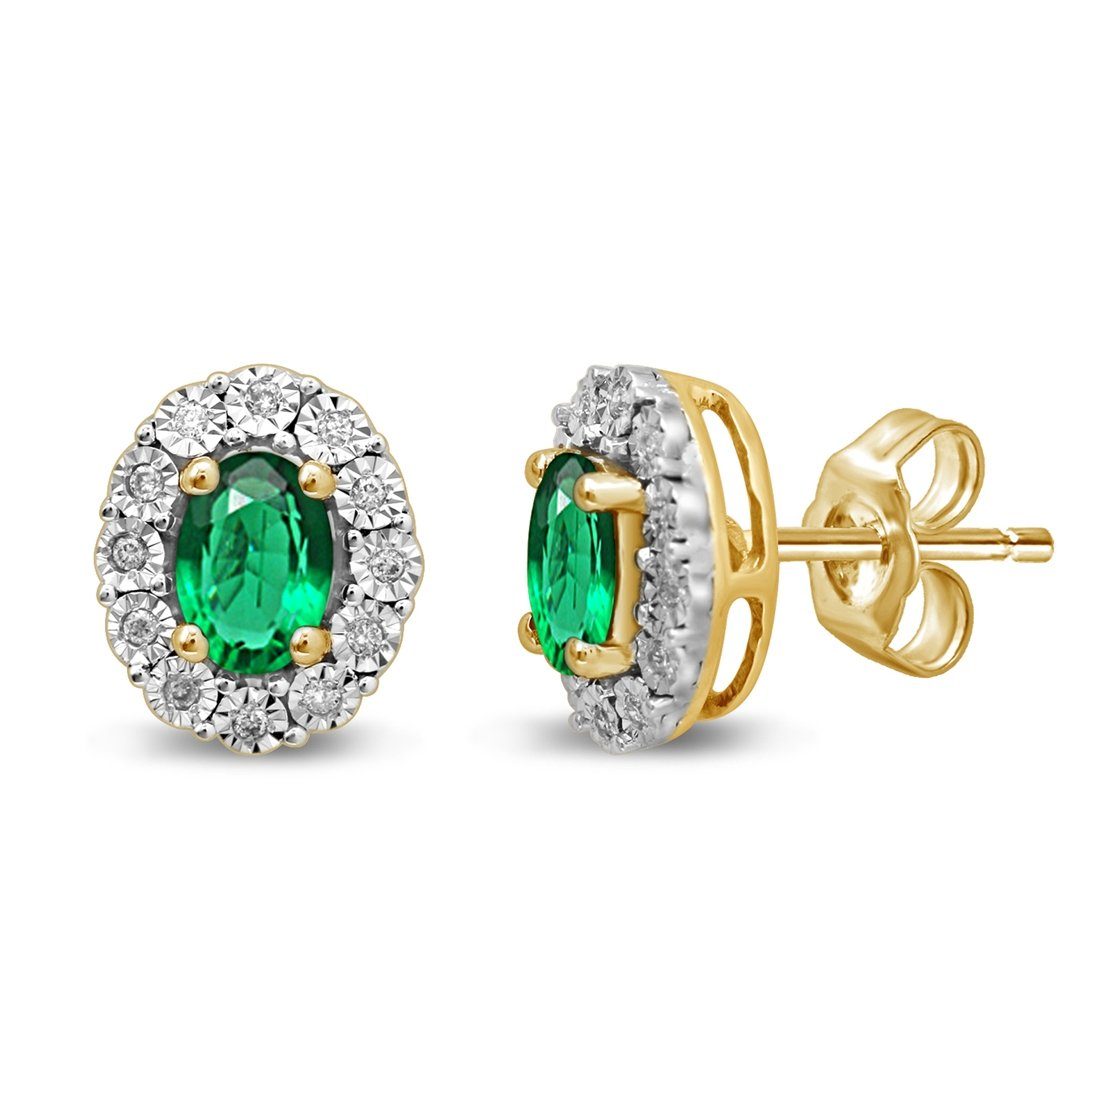 9ct Yellow Gold Created Emerald & Diamond Earrings Earrings Bevilles 